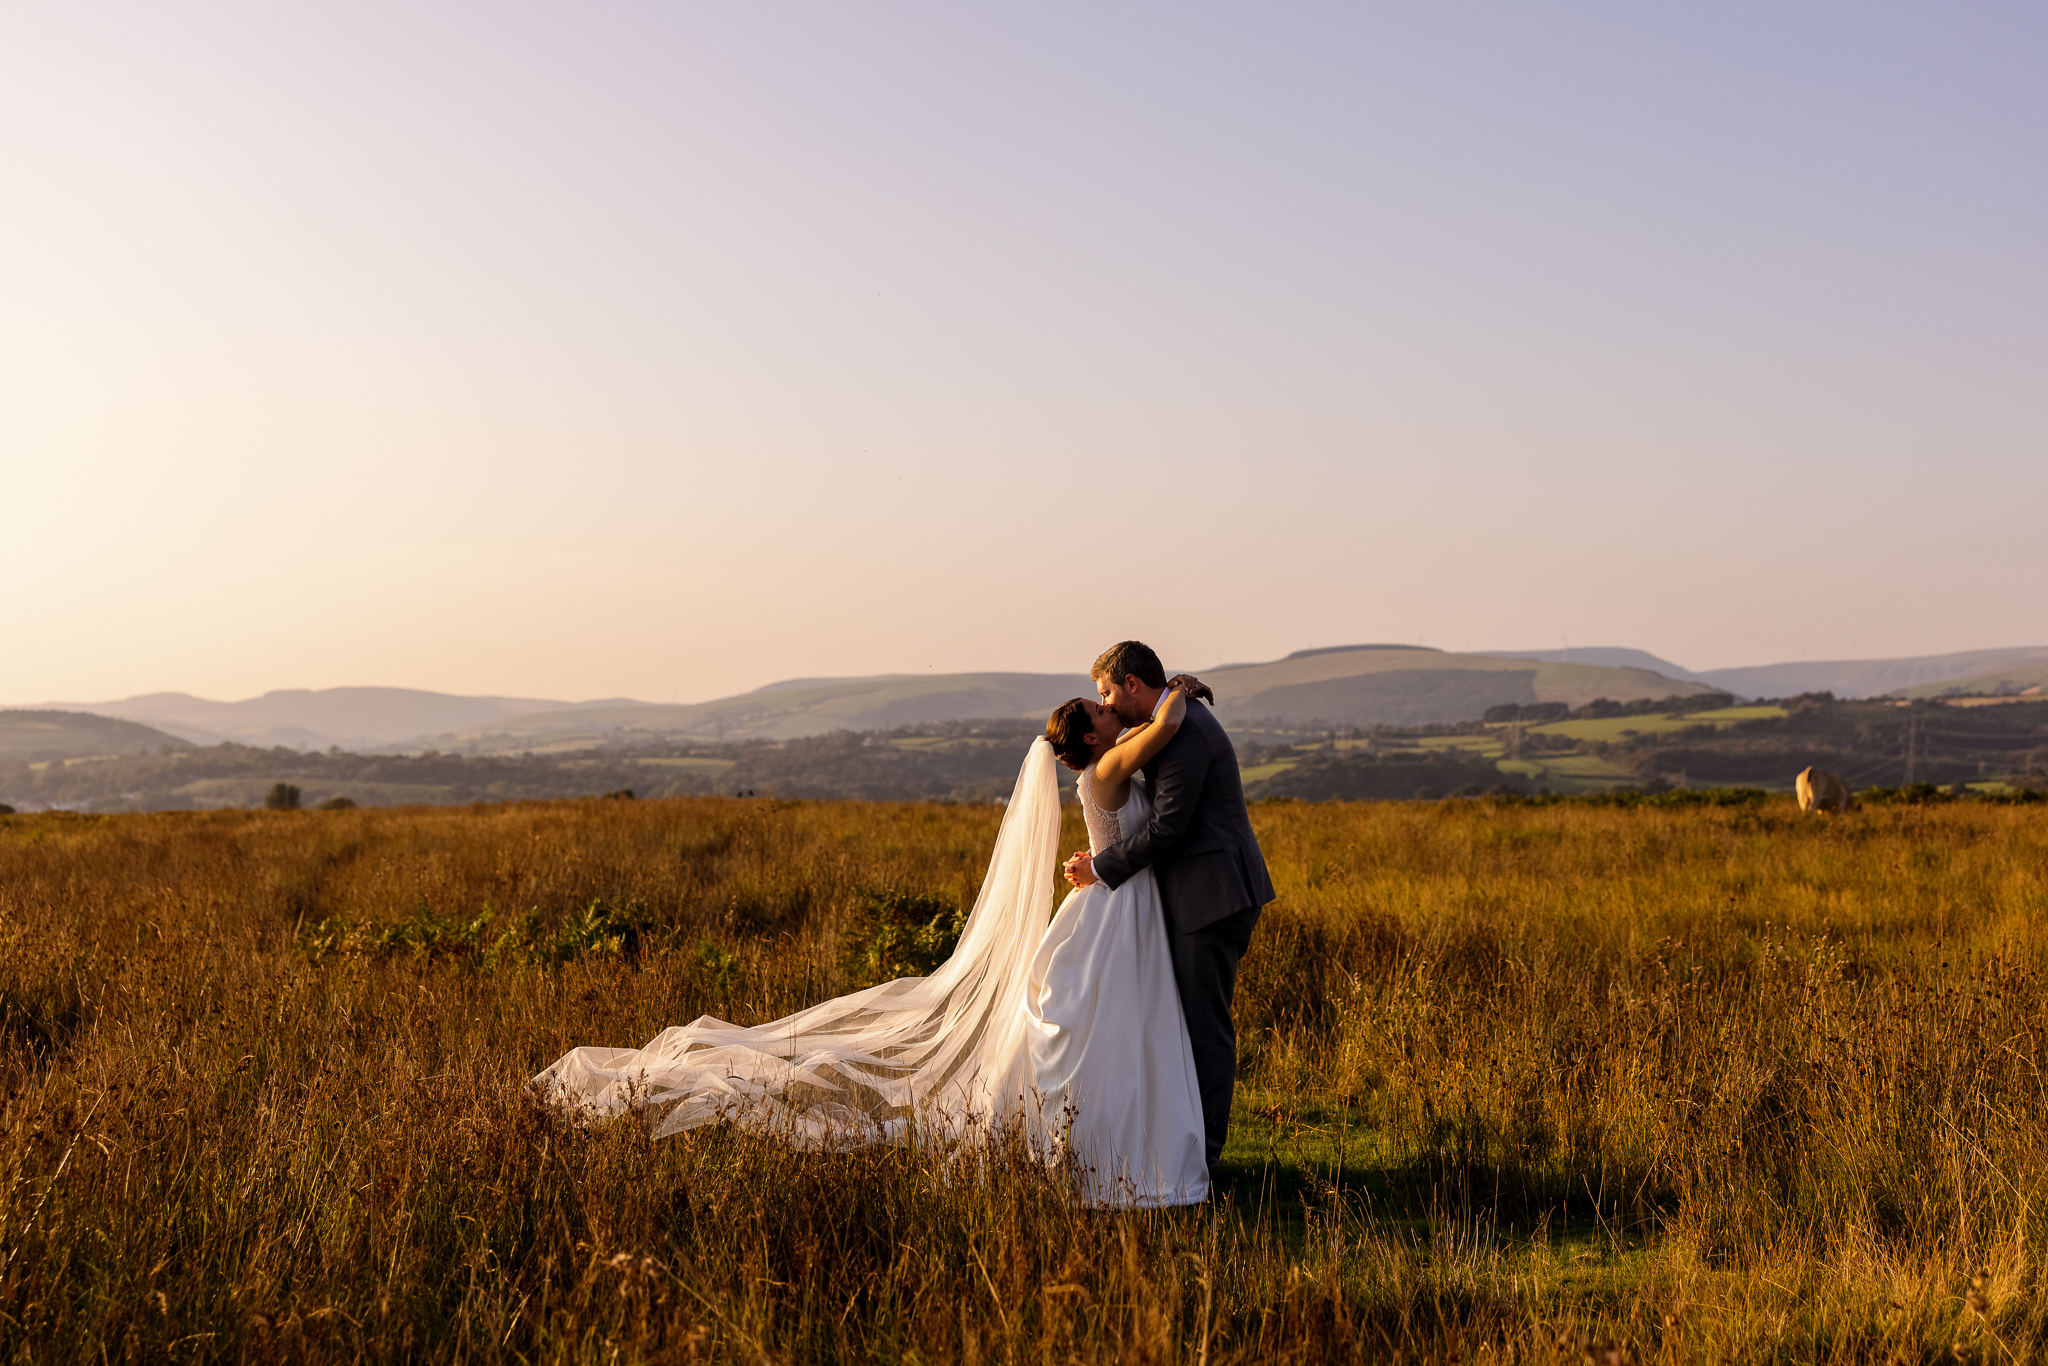 Wedding Photographer Bridgend - Art by Design Photography